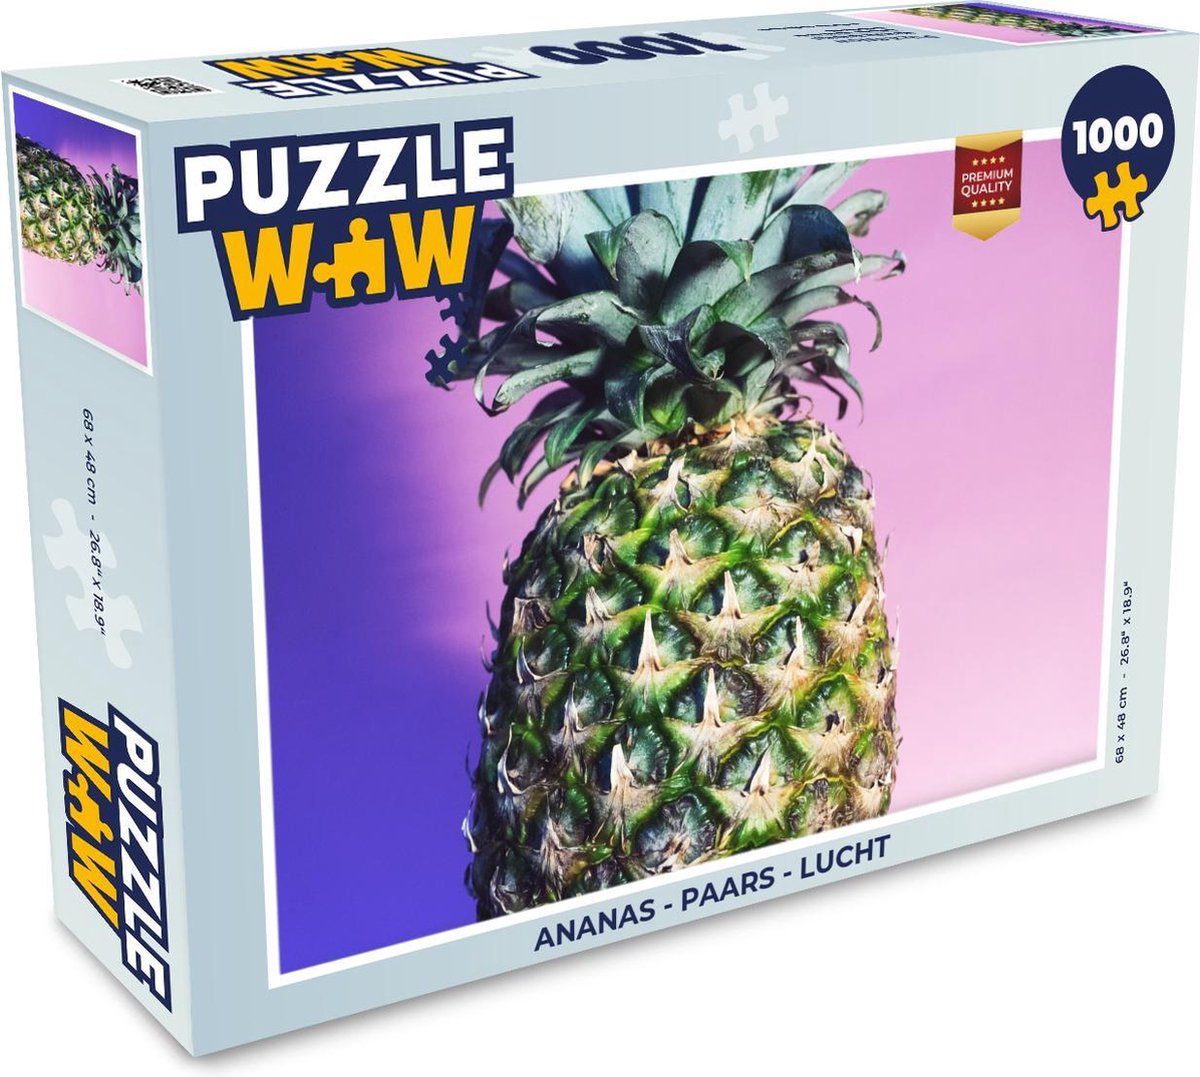 Afbeelding van product PuzzleWow  Puzzel Ananas - Paars - Lucht - Legpuzzel - Puzzel 1000 stukjes volwassenen